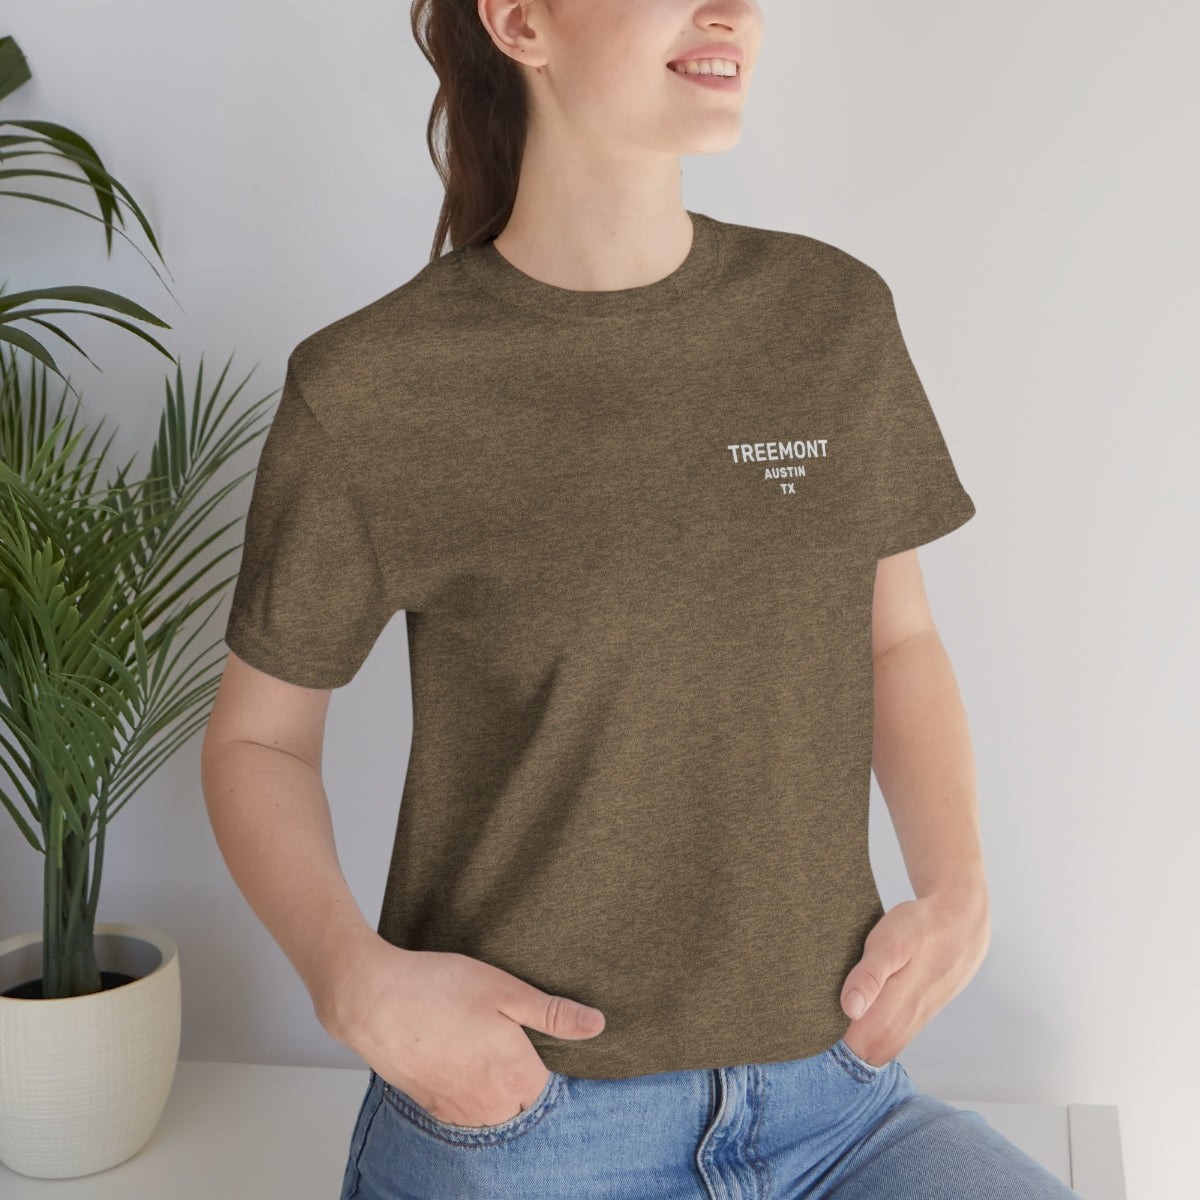 Treemont T-shirt: "Everyday"